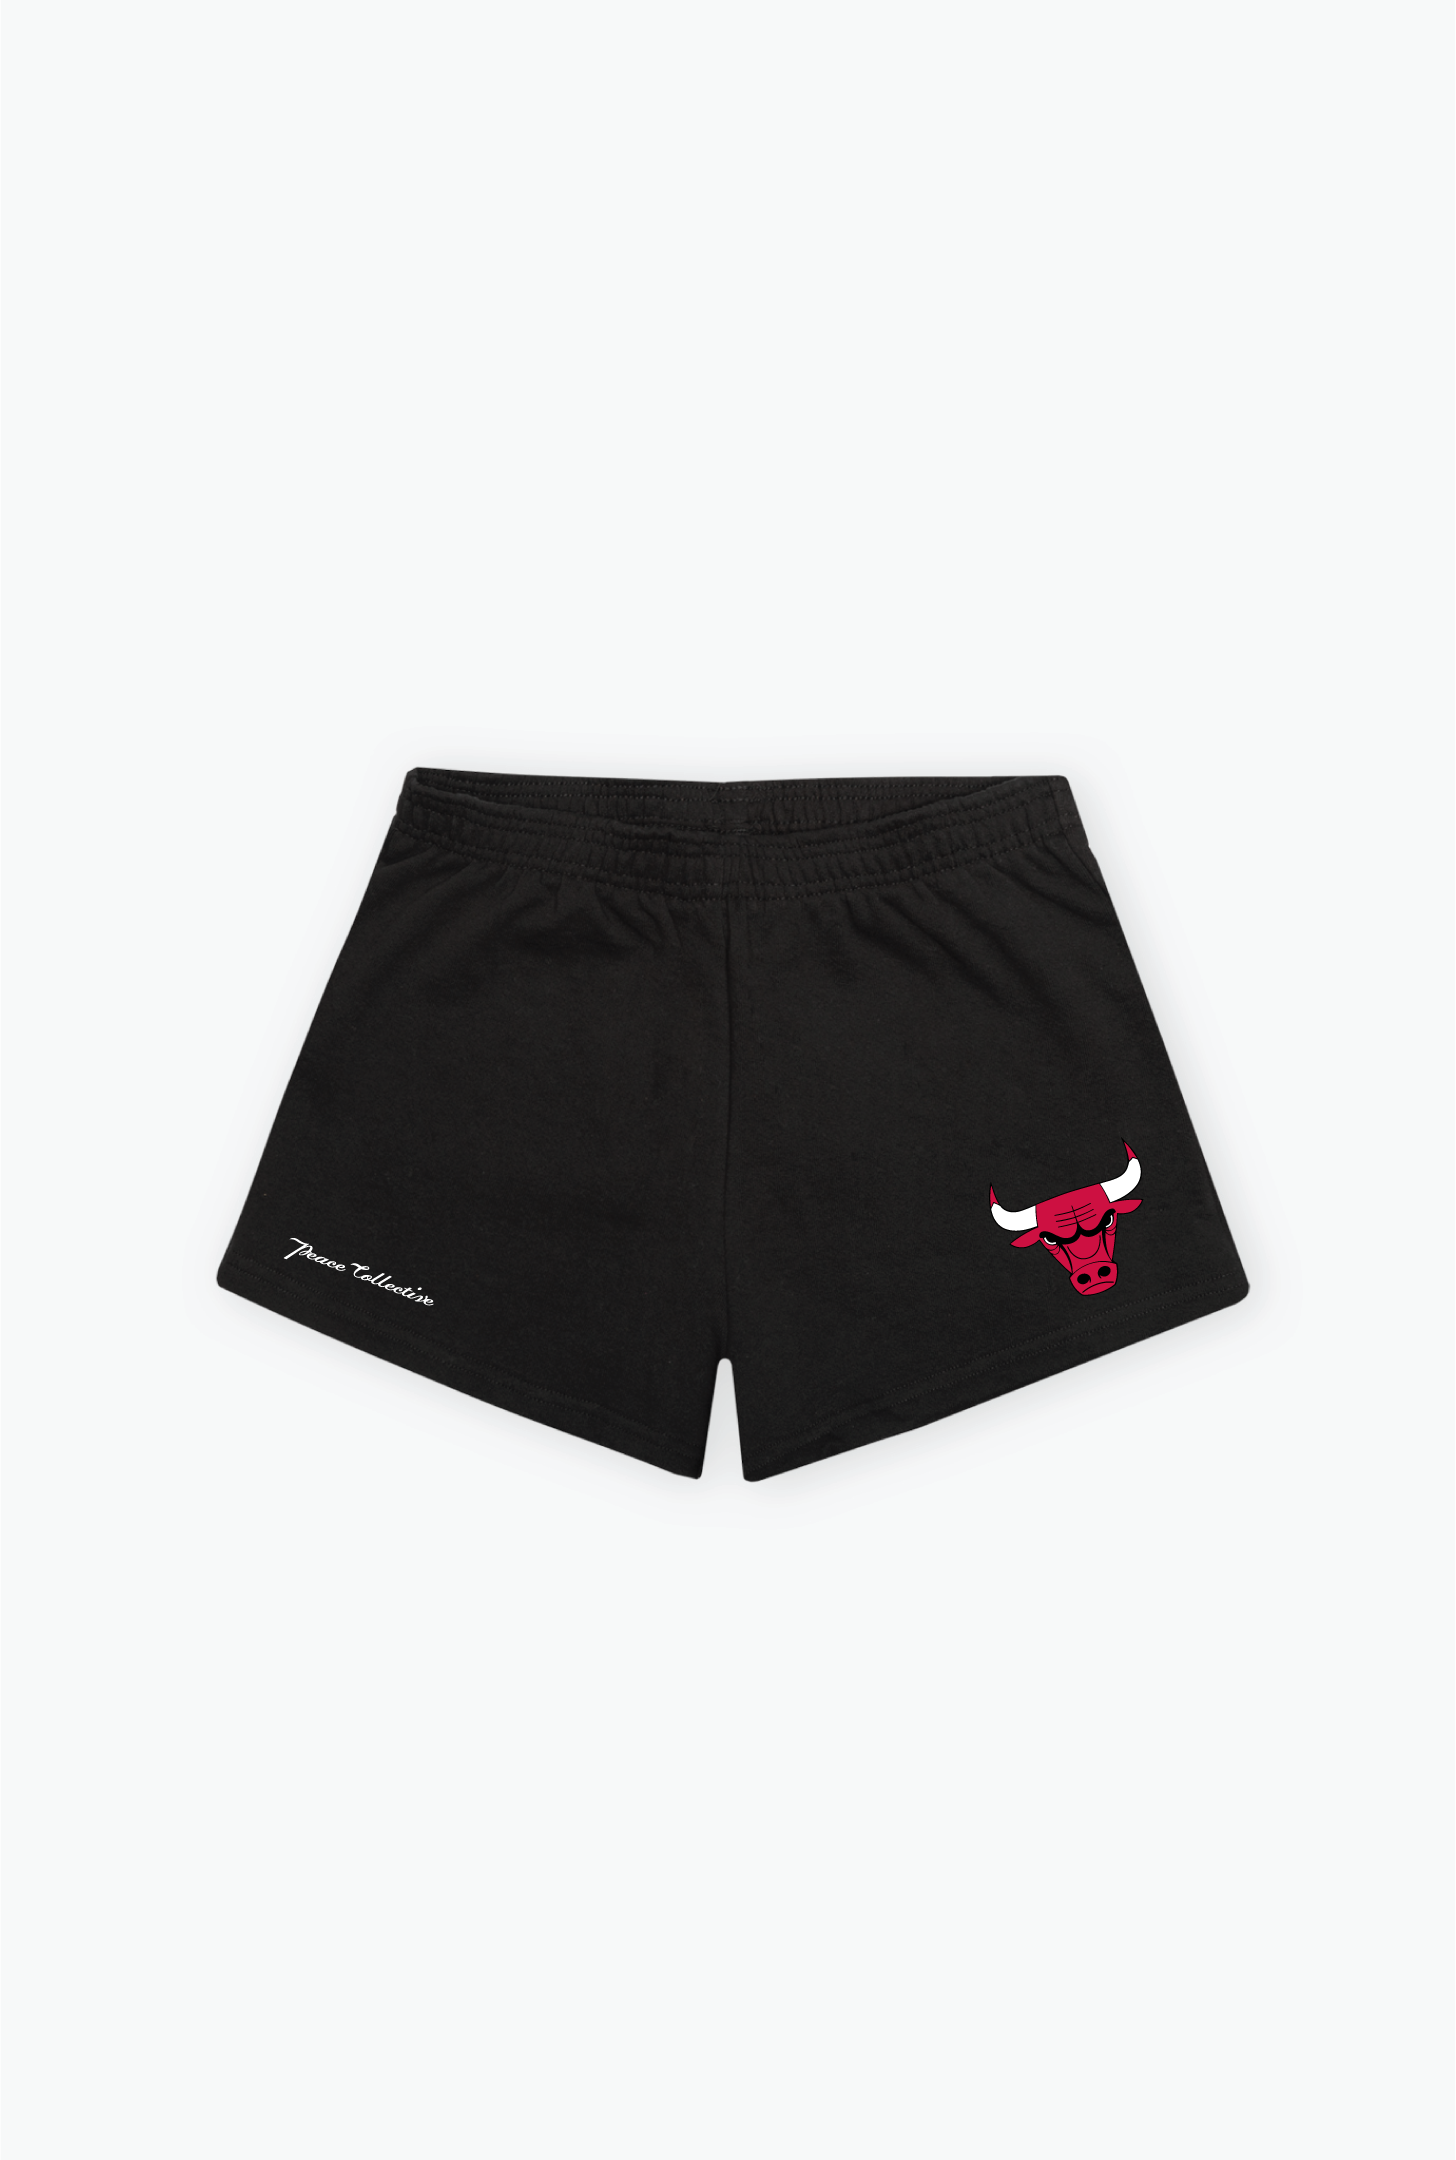 Chicago Bulls Women's Fleece Shorts - Black